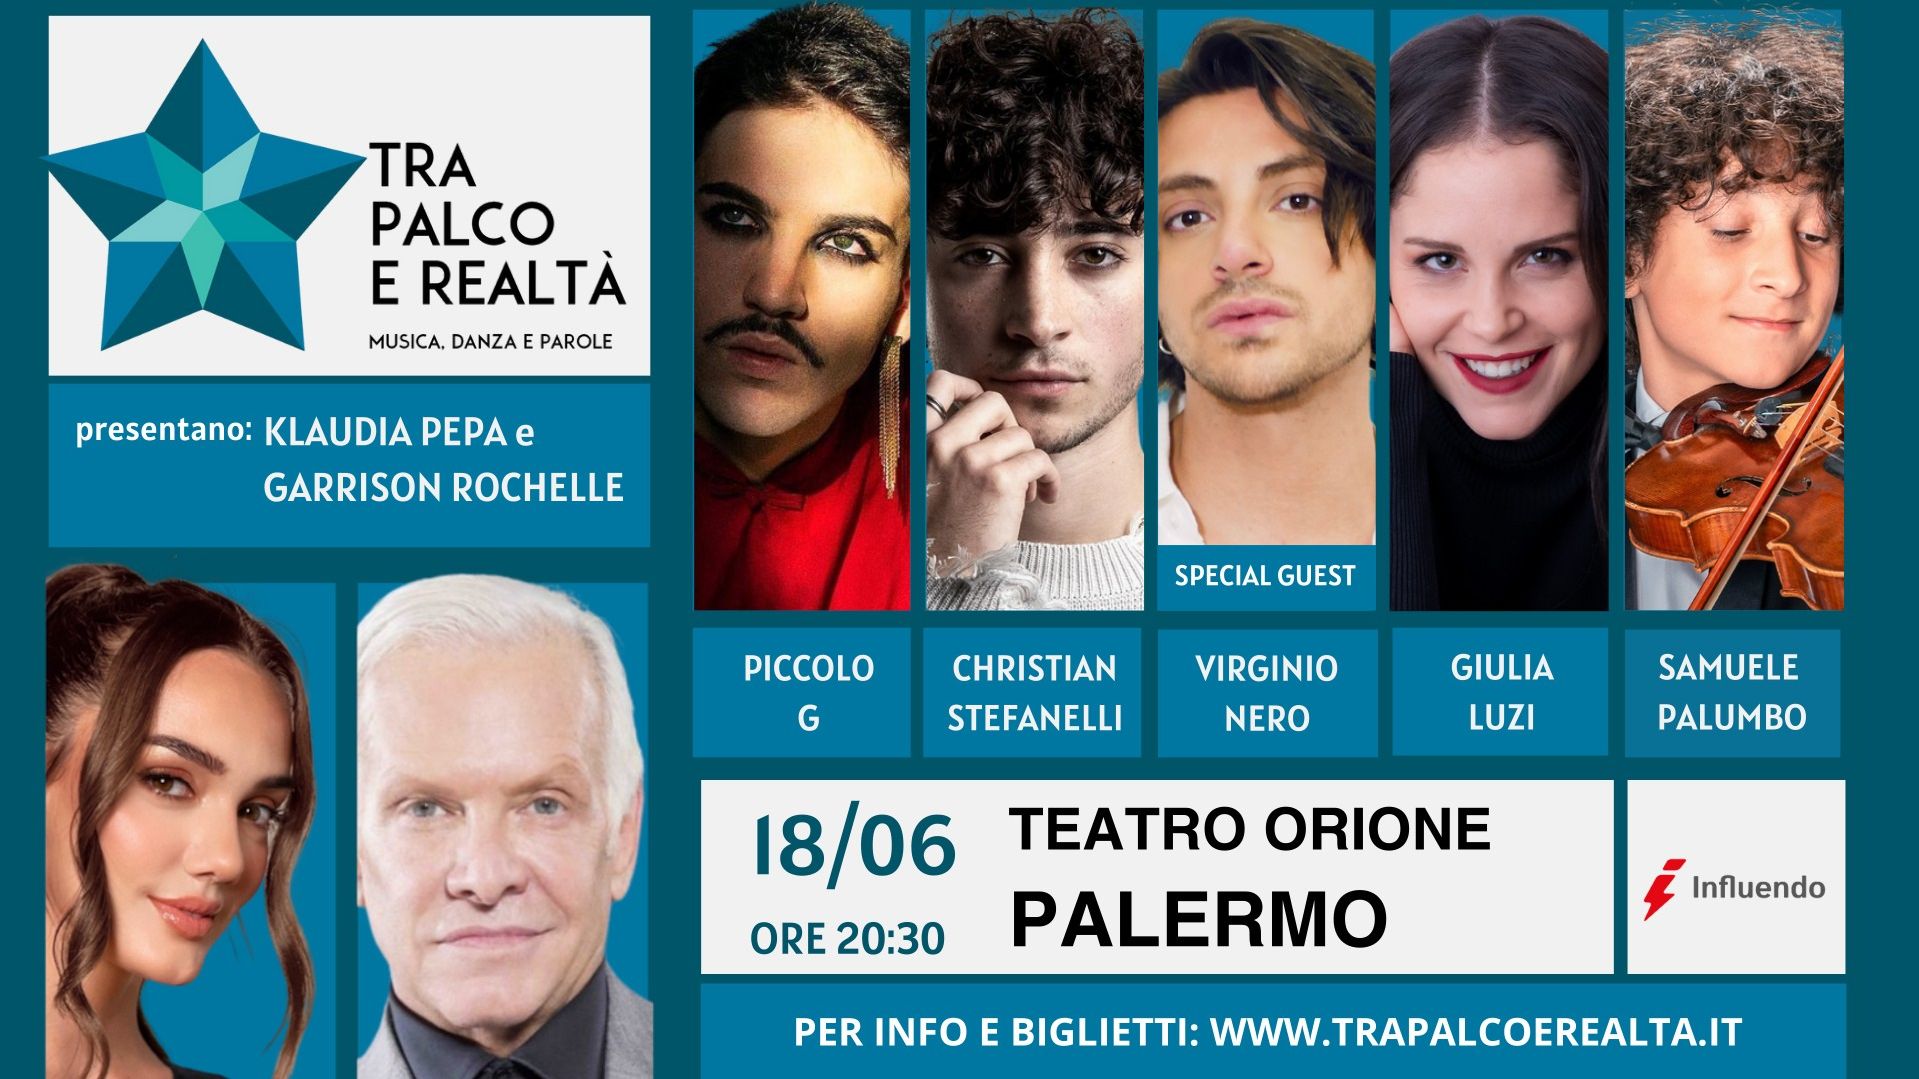 Tra Palco e Realtà "Il Tour" - Palermo